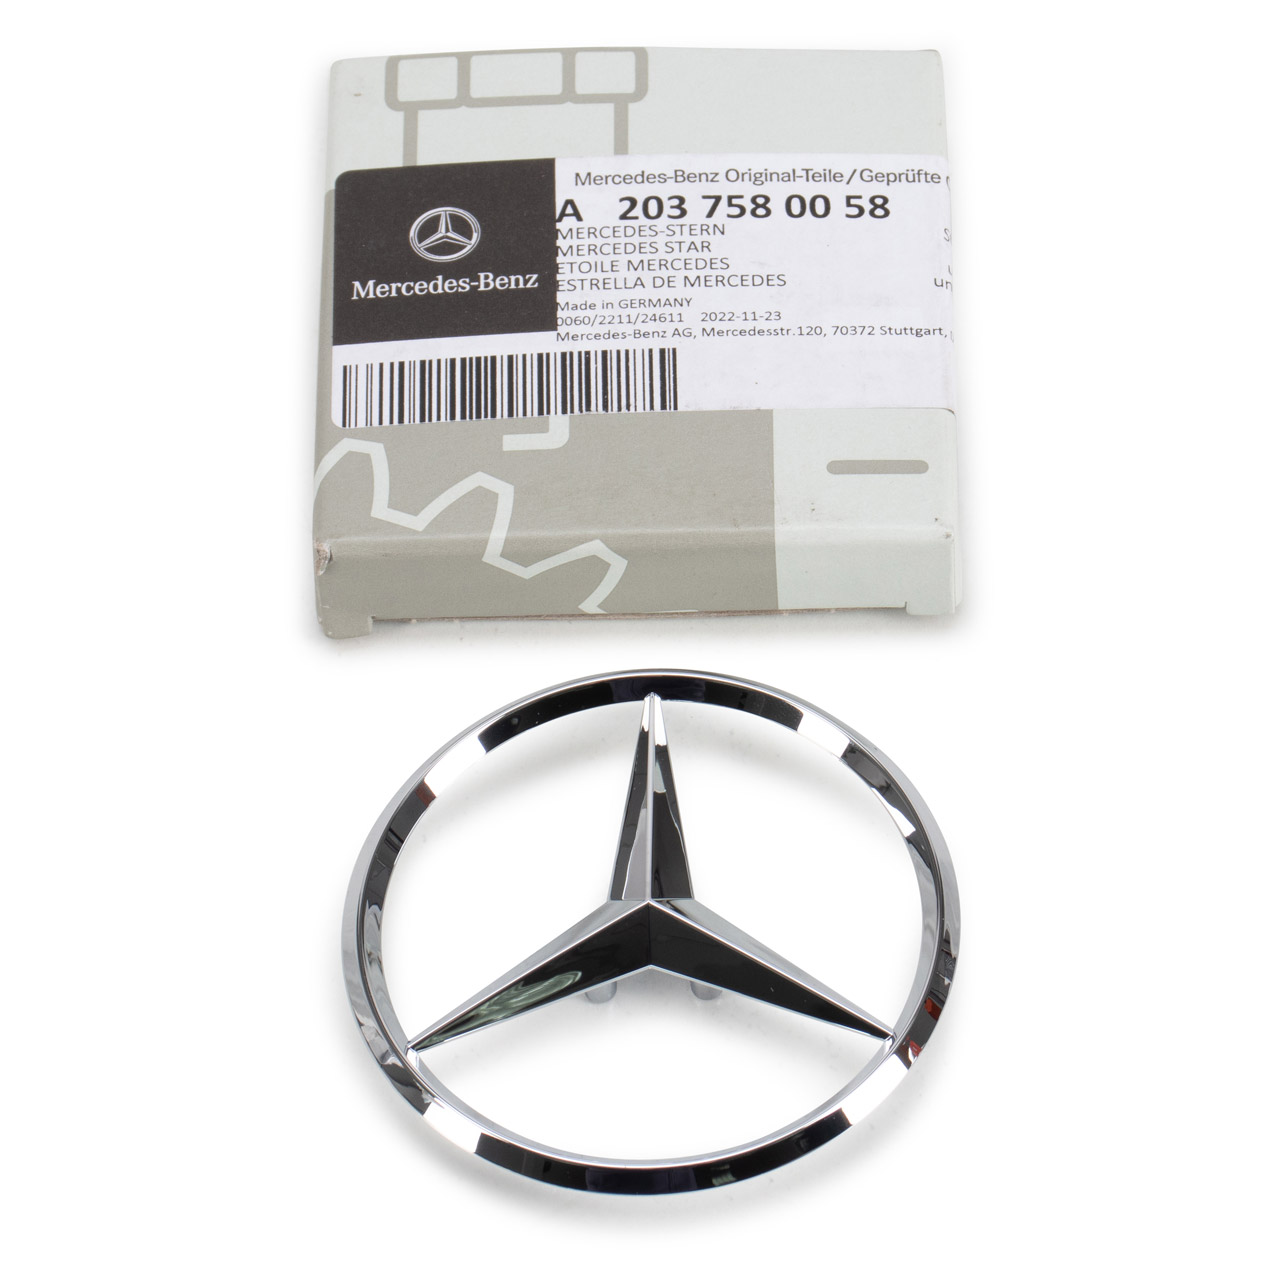 ORIGINAL Mercedes-Benz Emblem Motorhaube C205 S205 W212 W213 V167 W176 vorne 2037580058